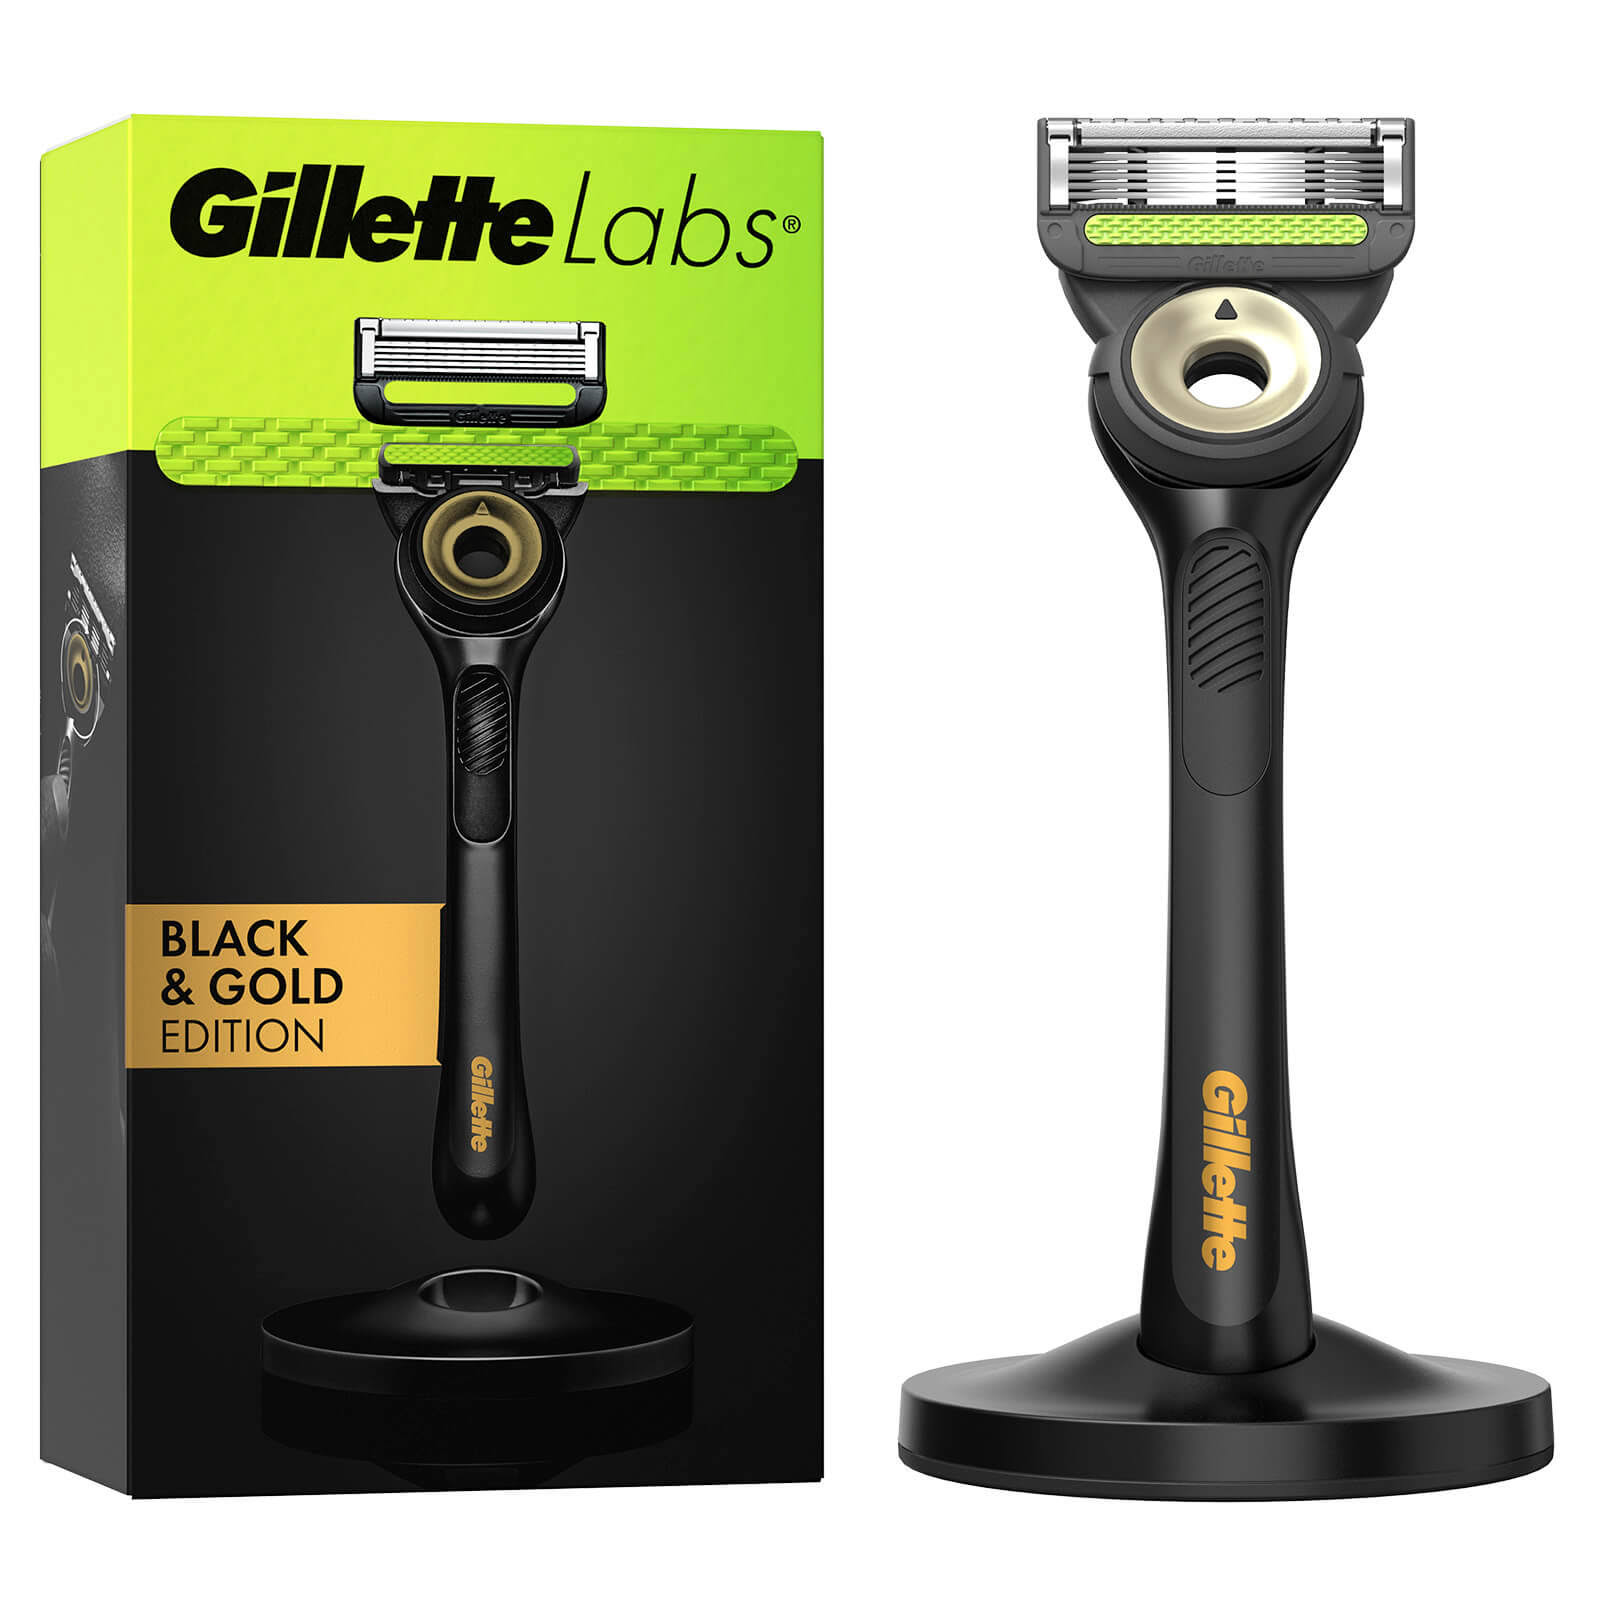 Gillette Labs with Exfoliating Bar Razor - Black/Gold